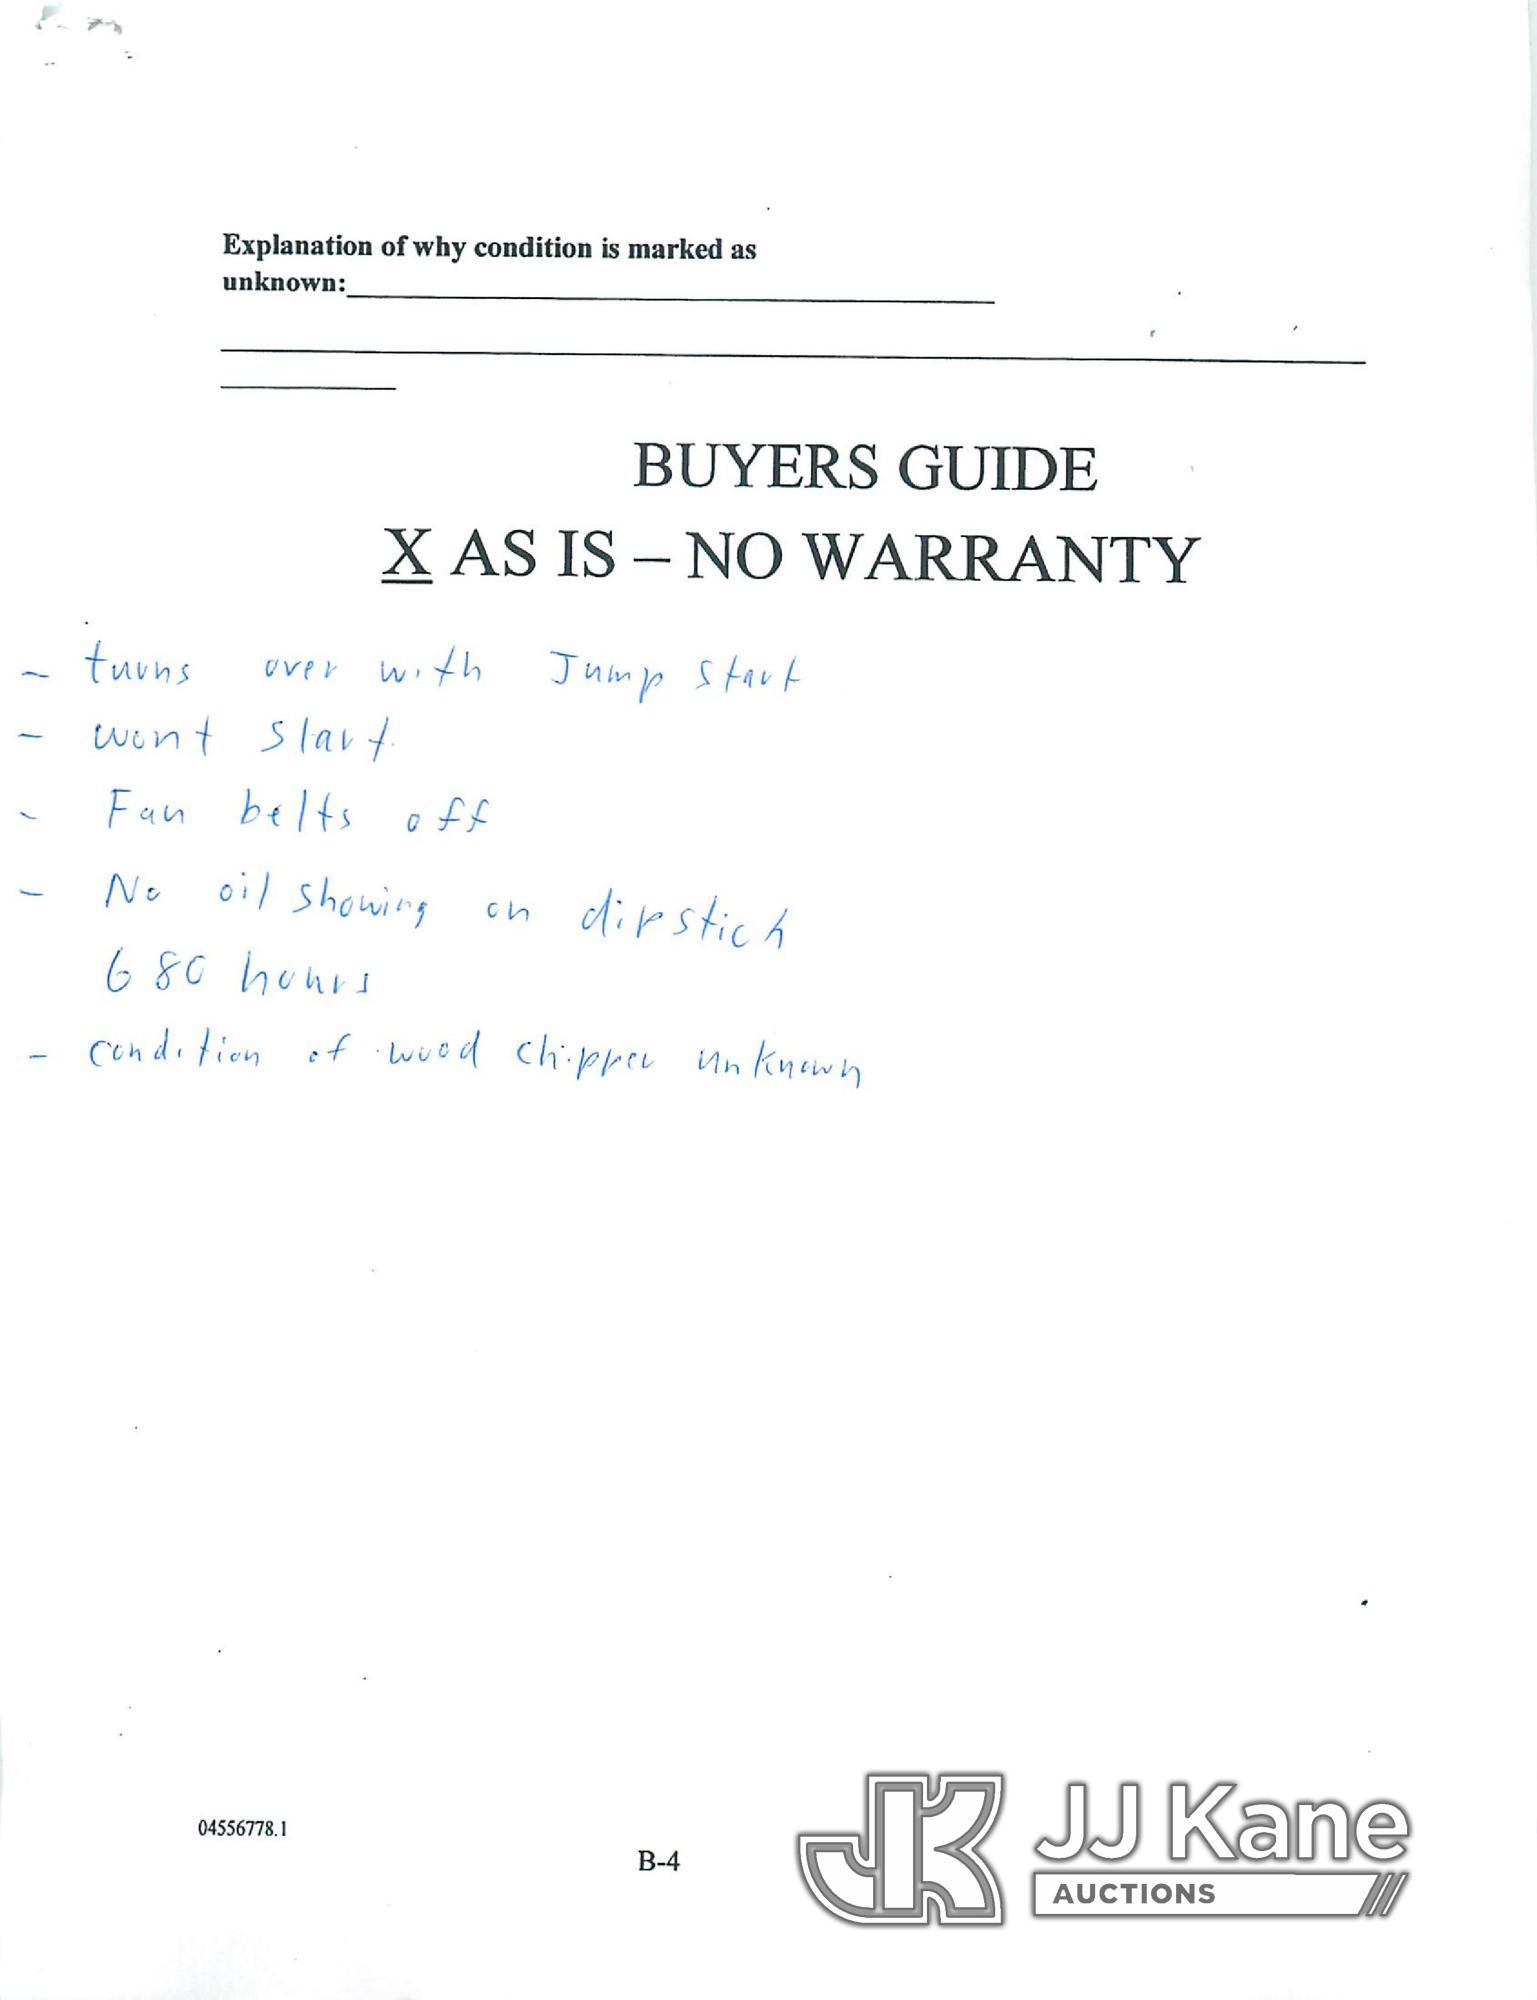 (Glendive, MT) 2005 Bandit 1290 Chipper Not Running, Condition Unknown, Cranks, No Key, Body Damage)